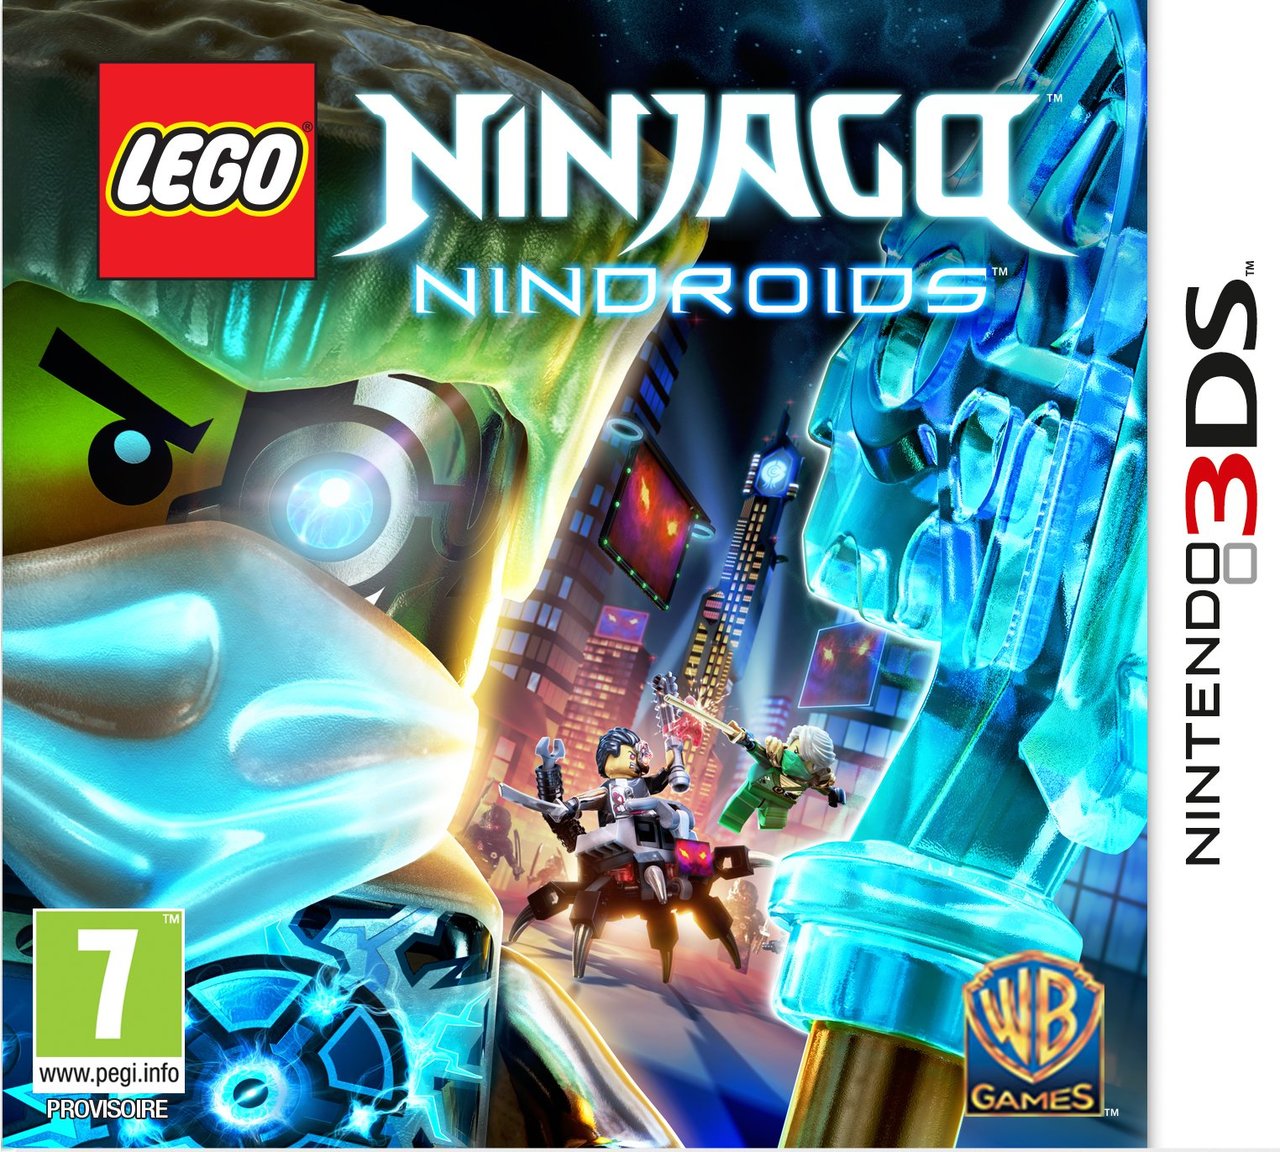 LEGO Ninjago : Nindroïds sur Nintendo 3DS - jeuxvideo.com - 1280 x 1152 jpeg 332kB